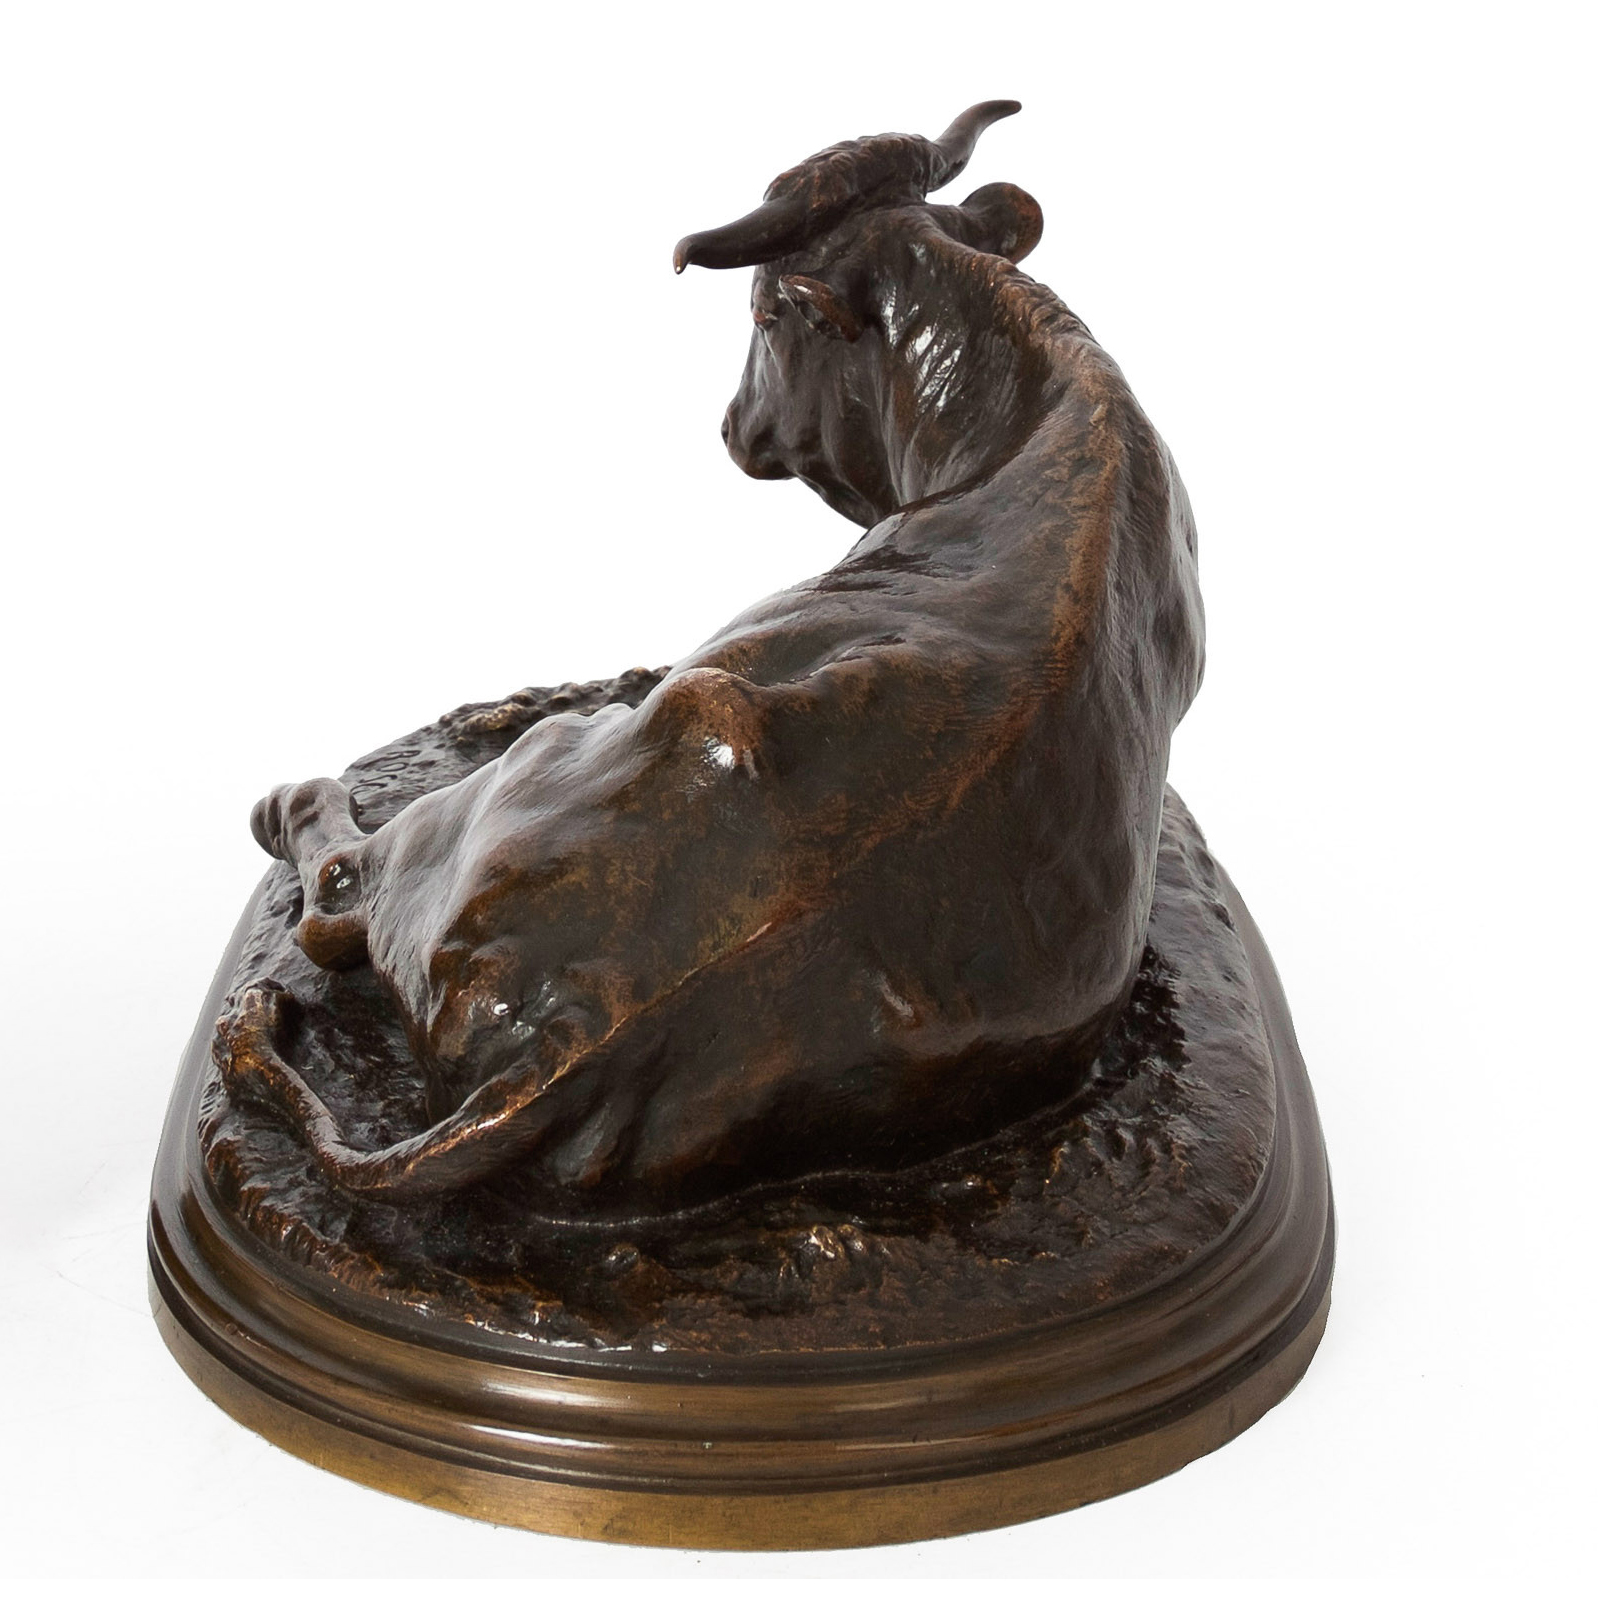 Sitting Bull Figurine